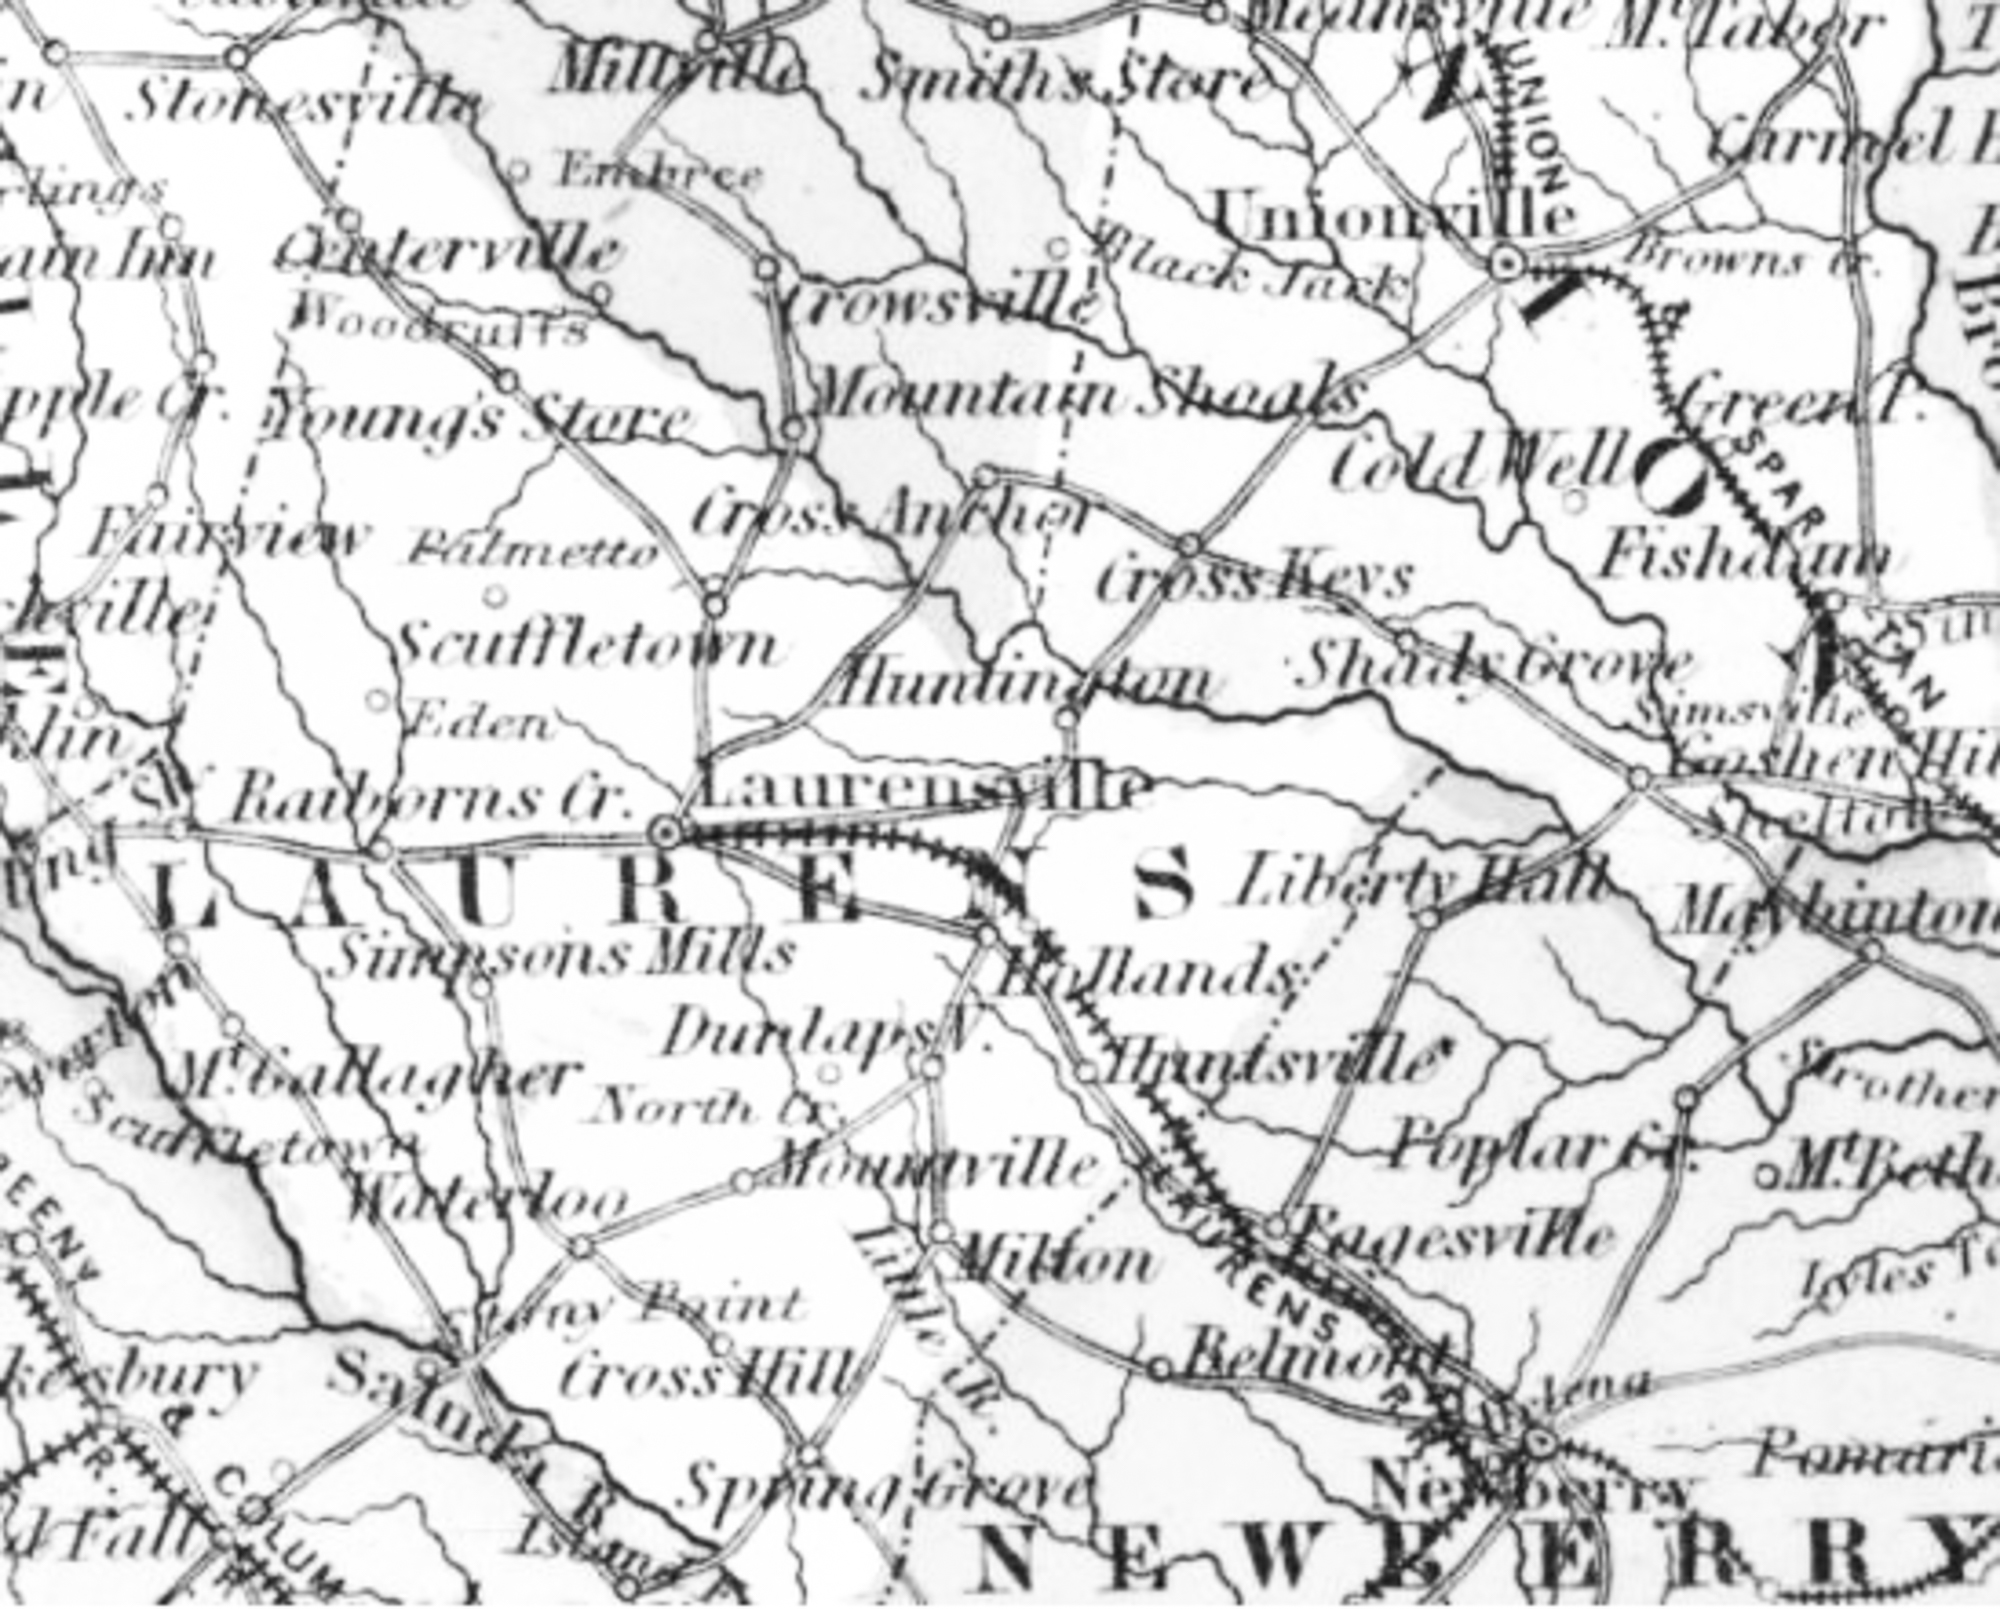 1856 Railroad Map of S.C. - Mountville Area